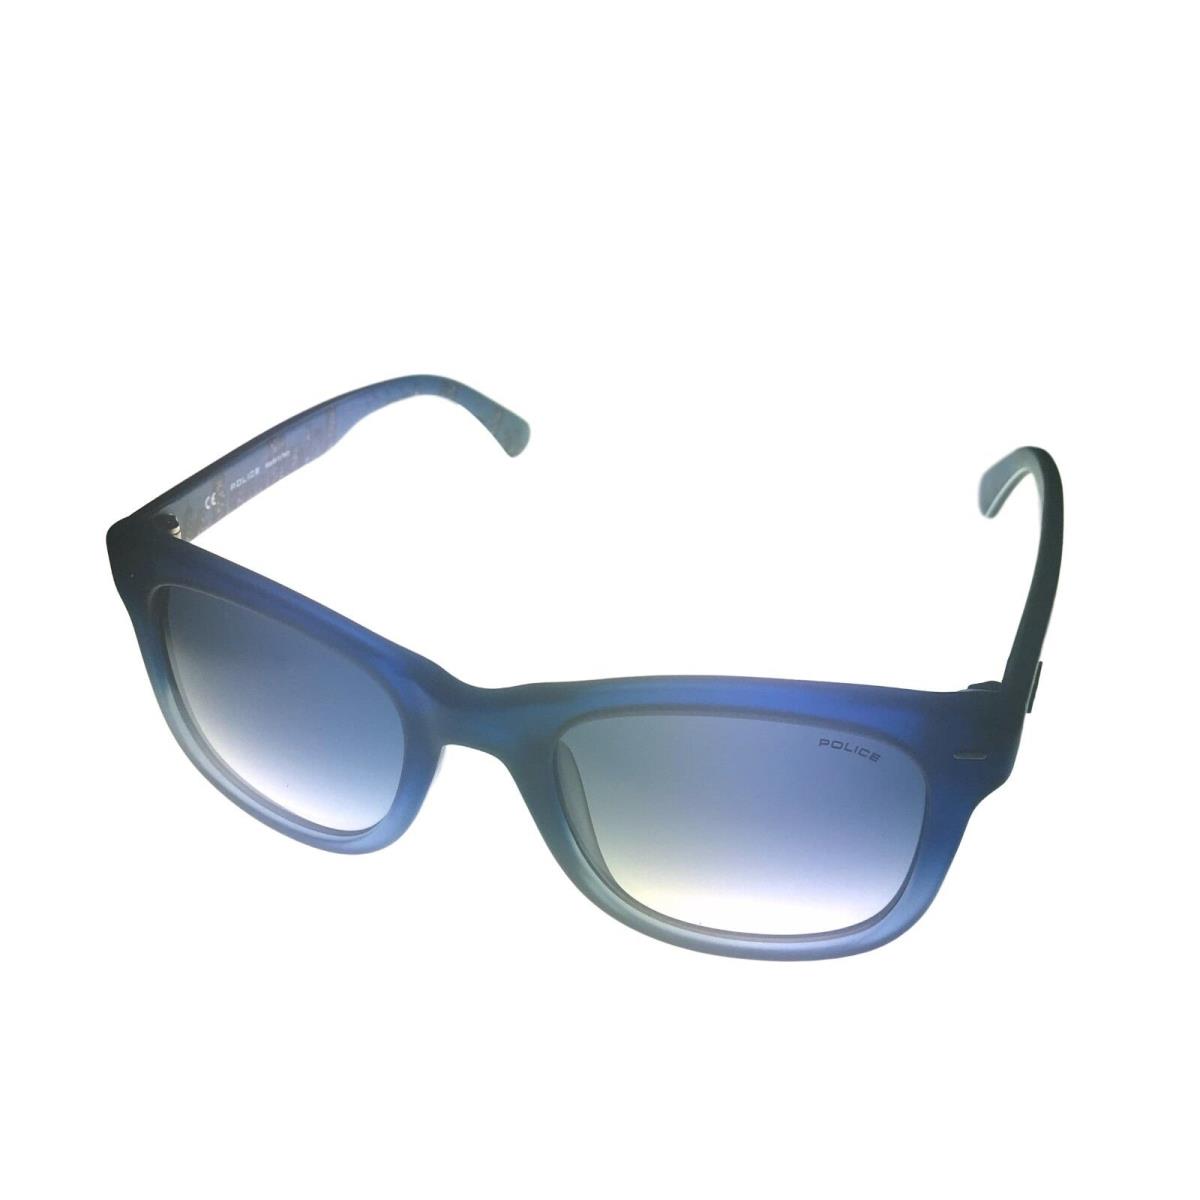 POLICE Sunglasses & Case S1639G 4AN Lunettes Gafas Occhiali 